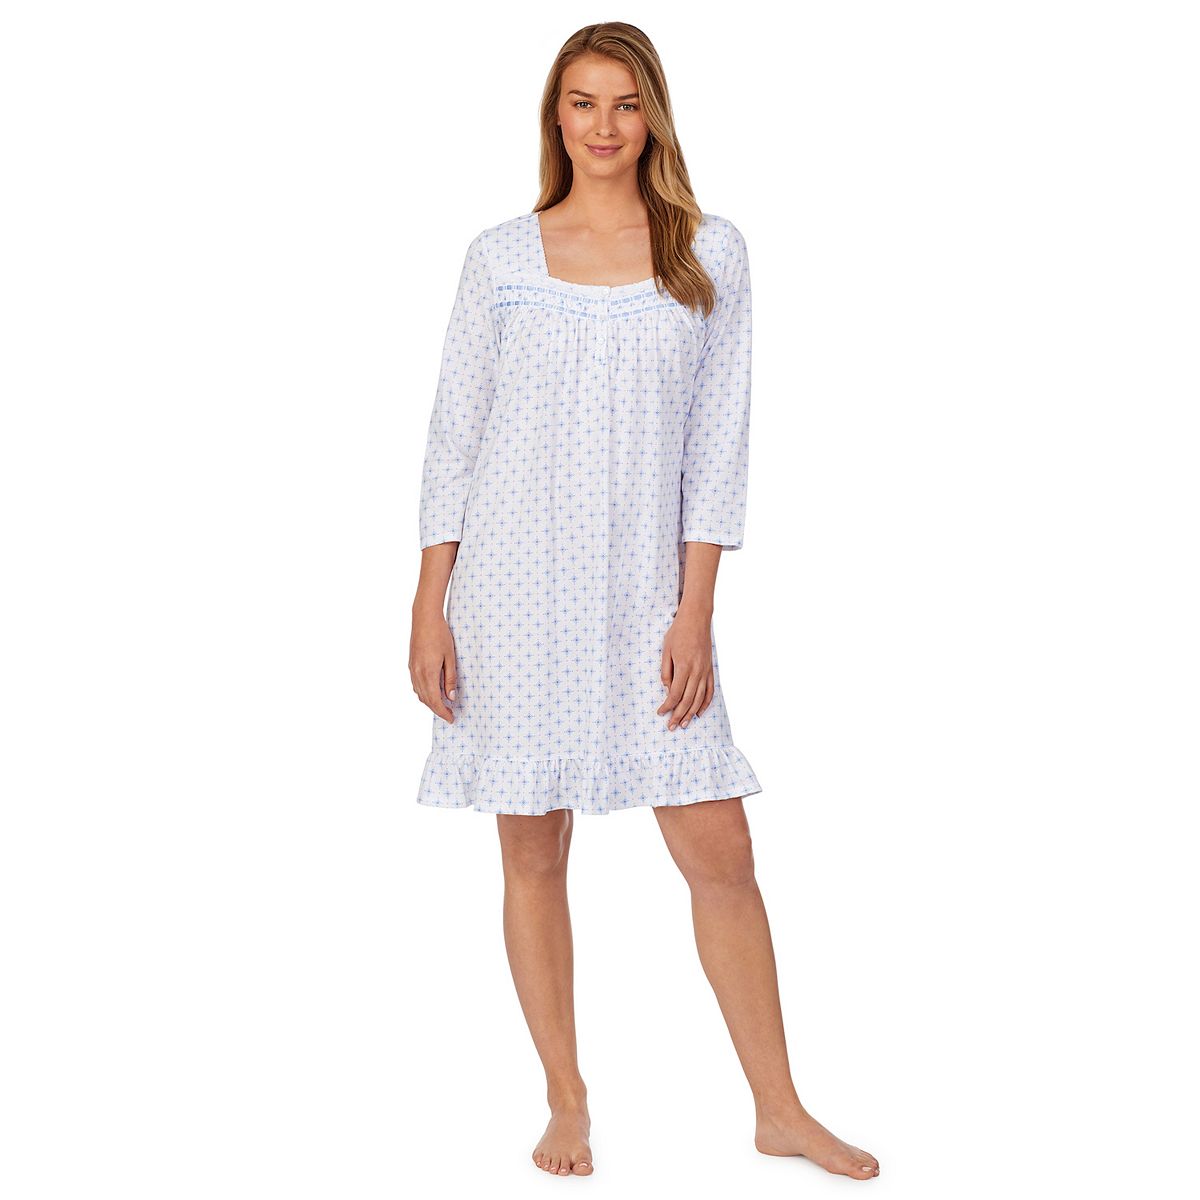 HDE Women's Cotton Nightgowns Short Sleeve Sleep Dress Need More